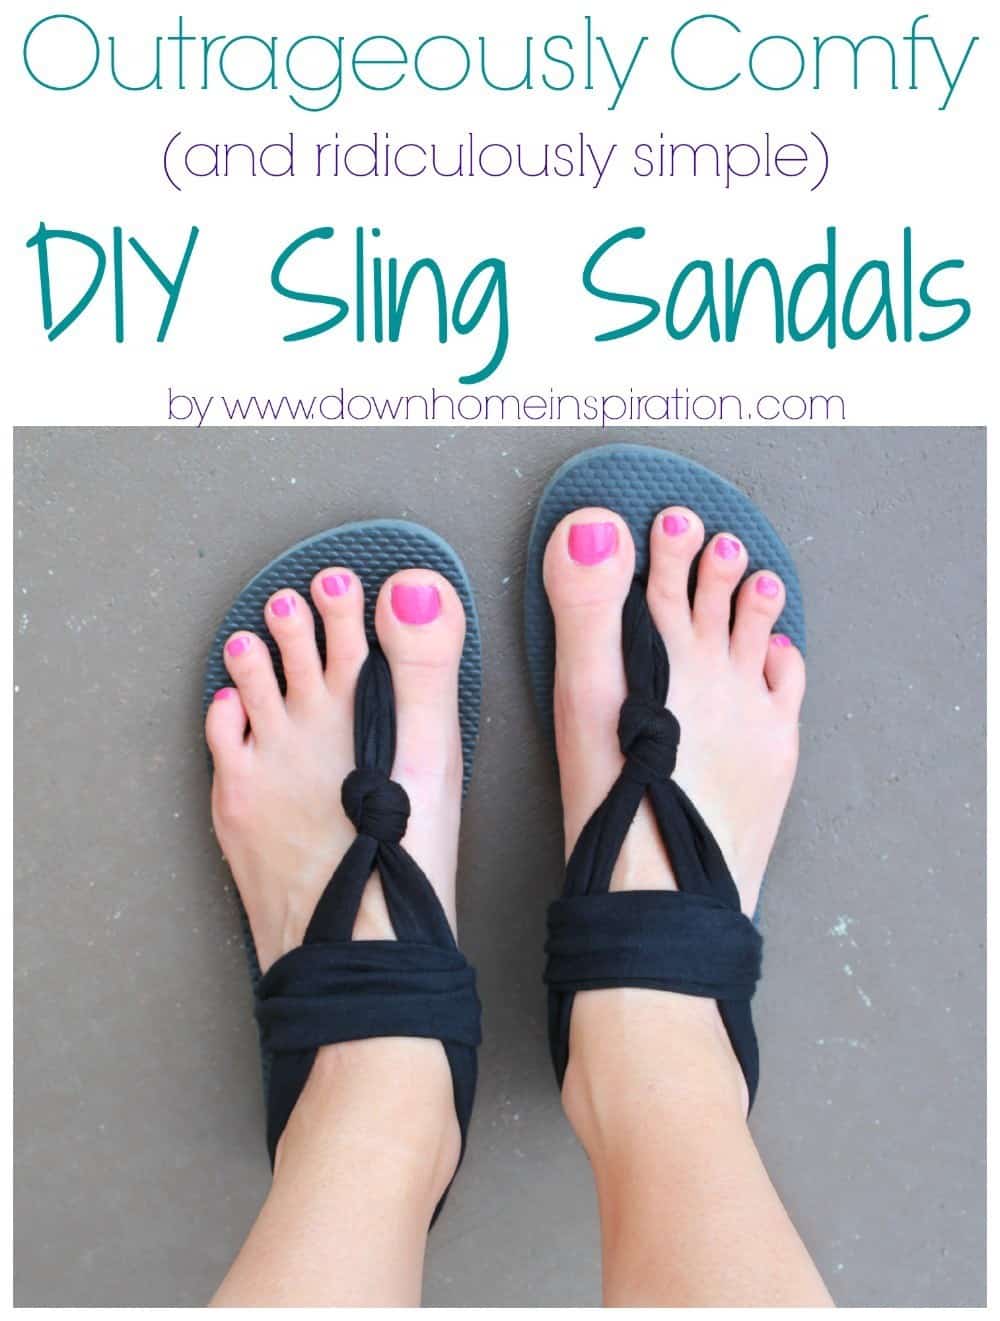 Super comfy DIY sling sandals